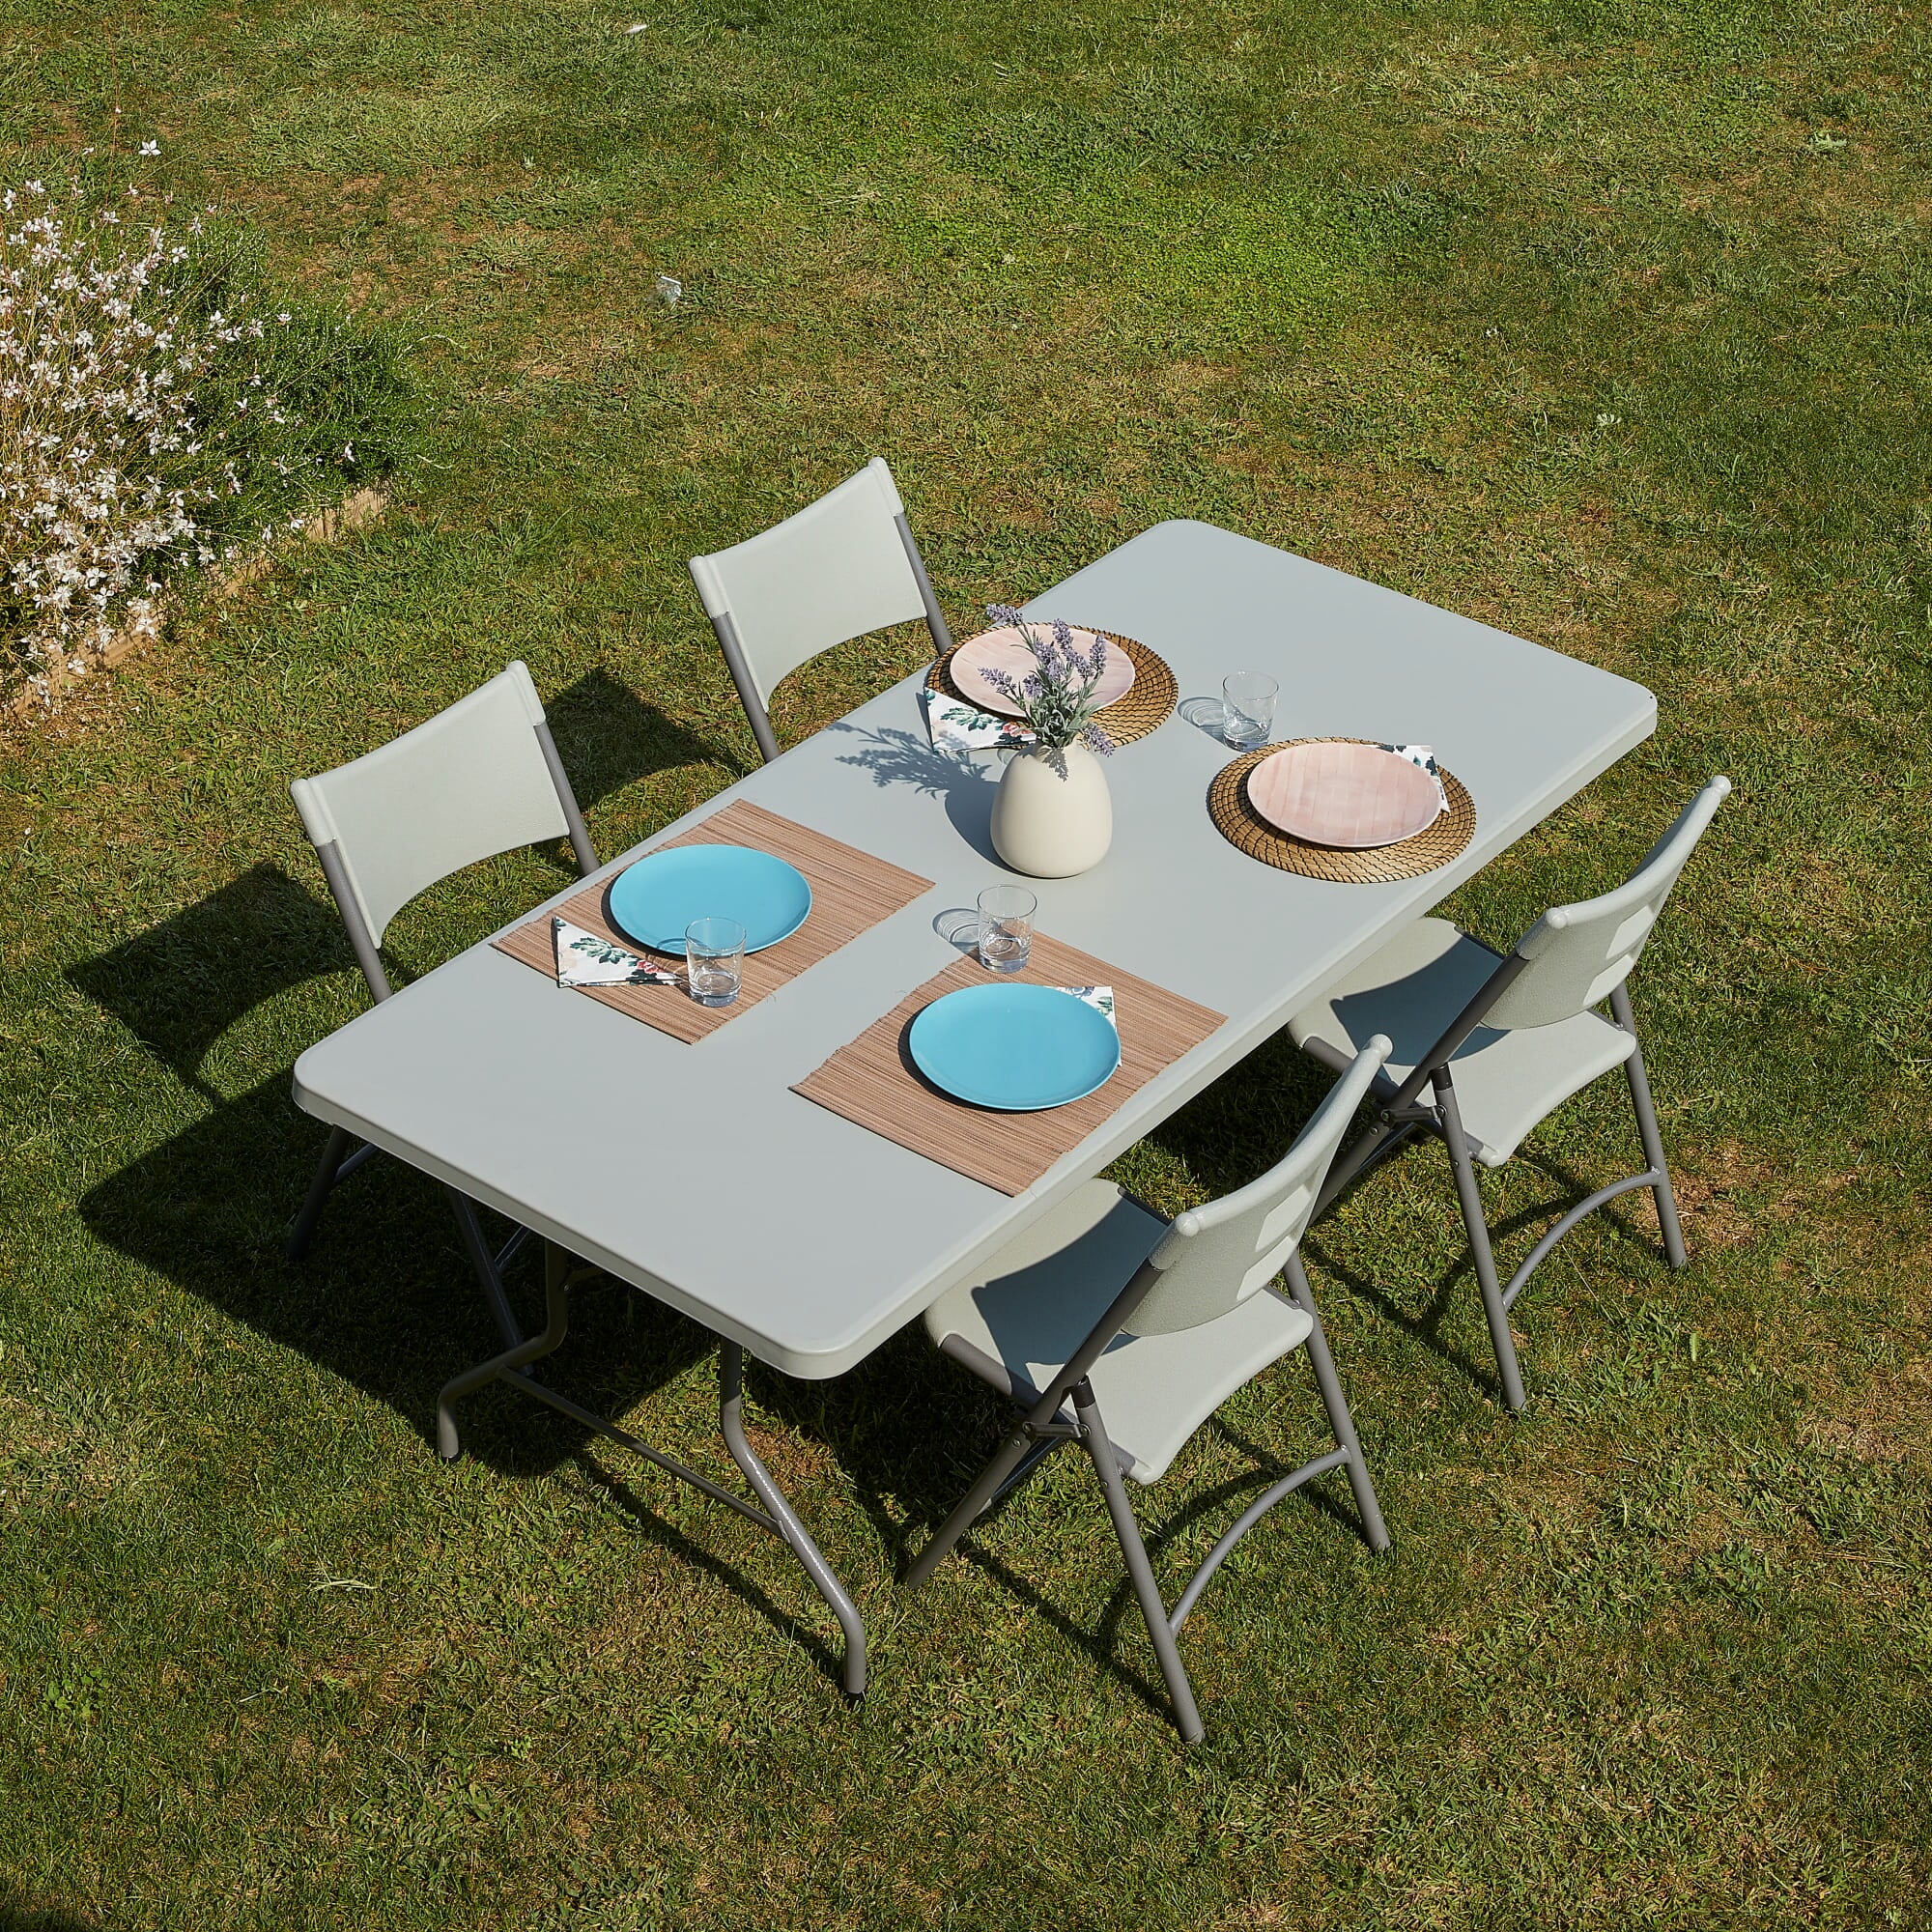 Garbar vivaldi rectangular folding table indoors, outdoors